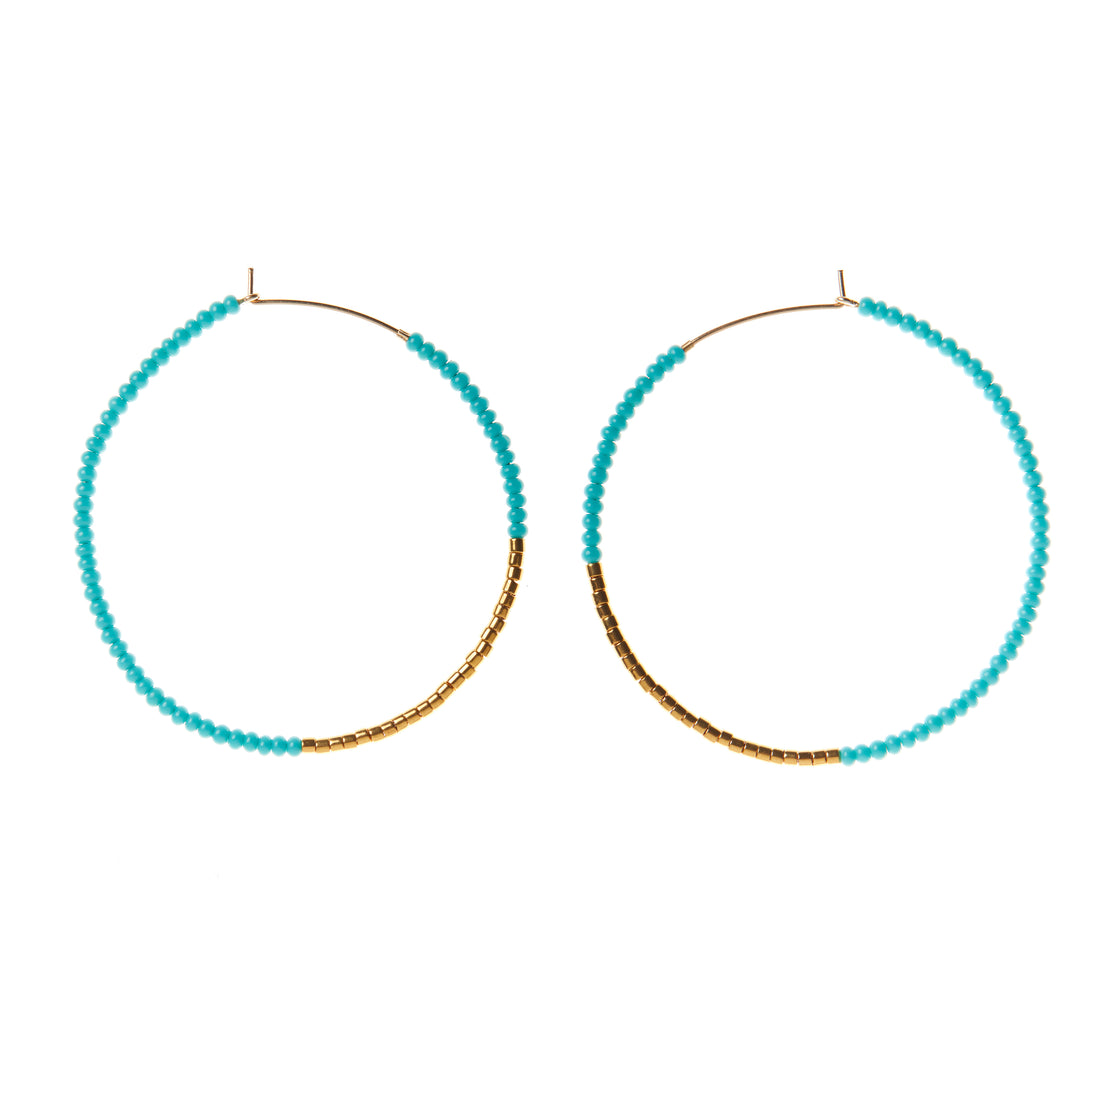 Large Hoop Earrings - TURQUOISE/GOLD